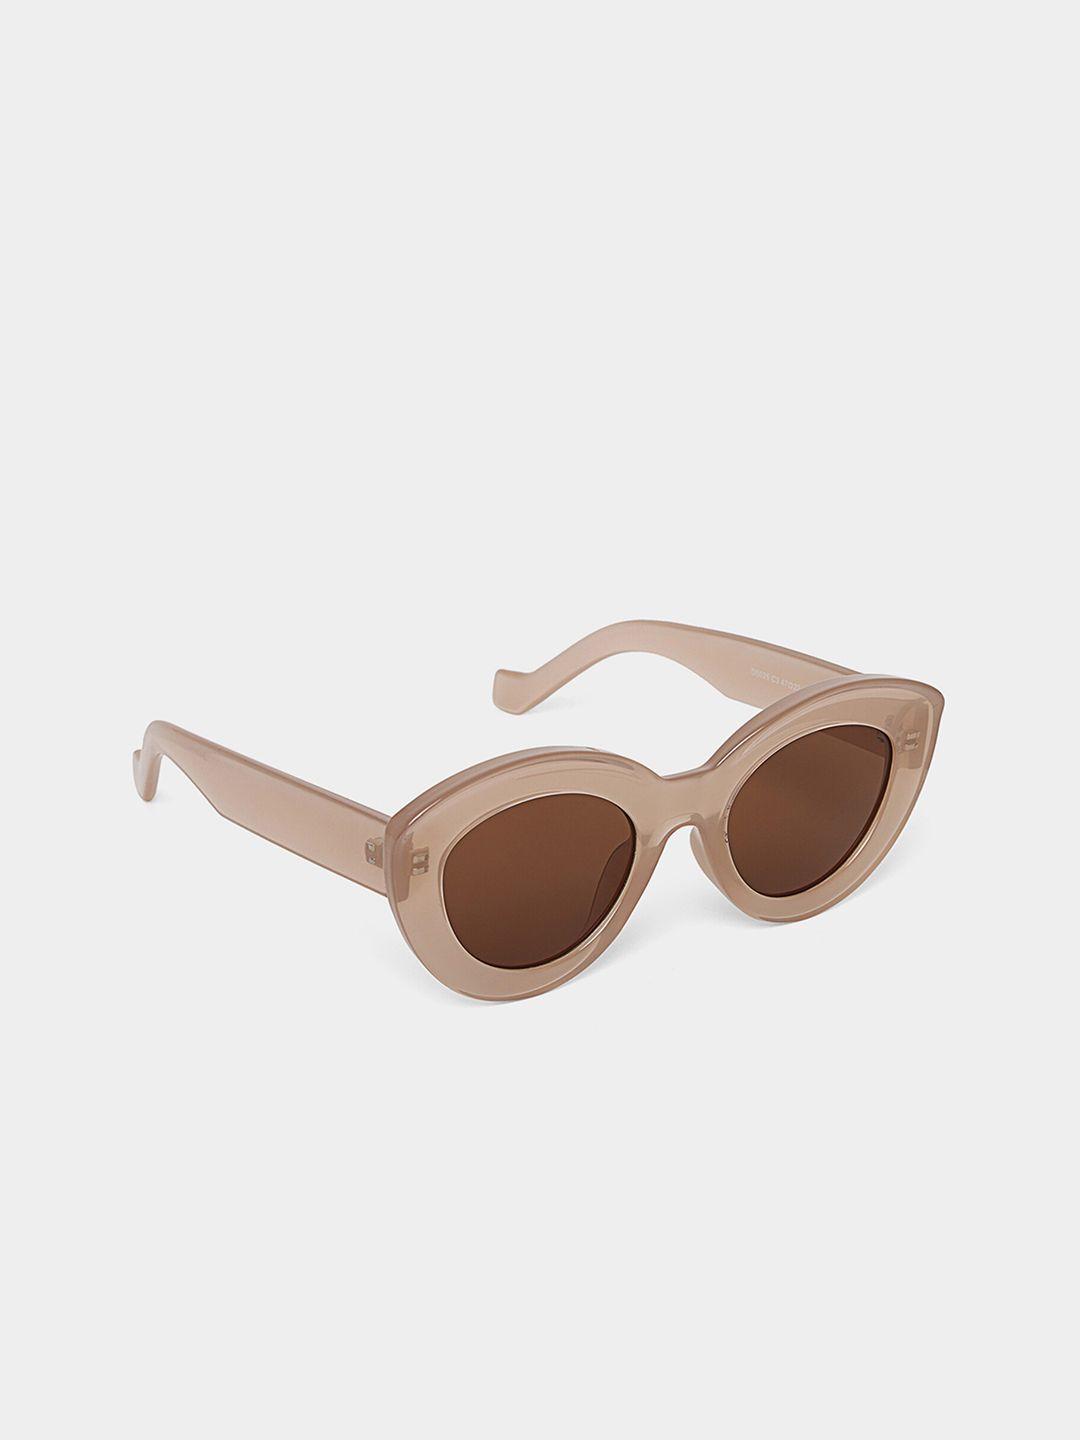 20dresses women brown lens & brown oval sunglasses sg0577